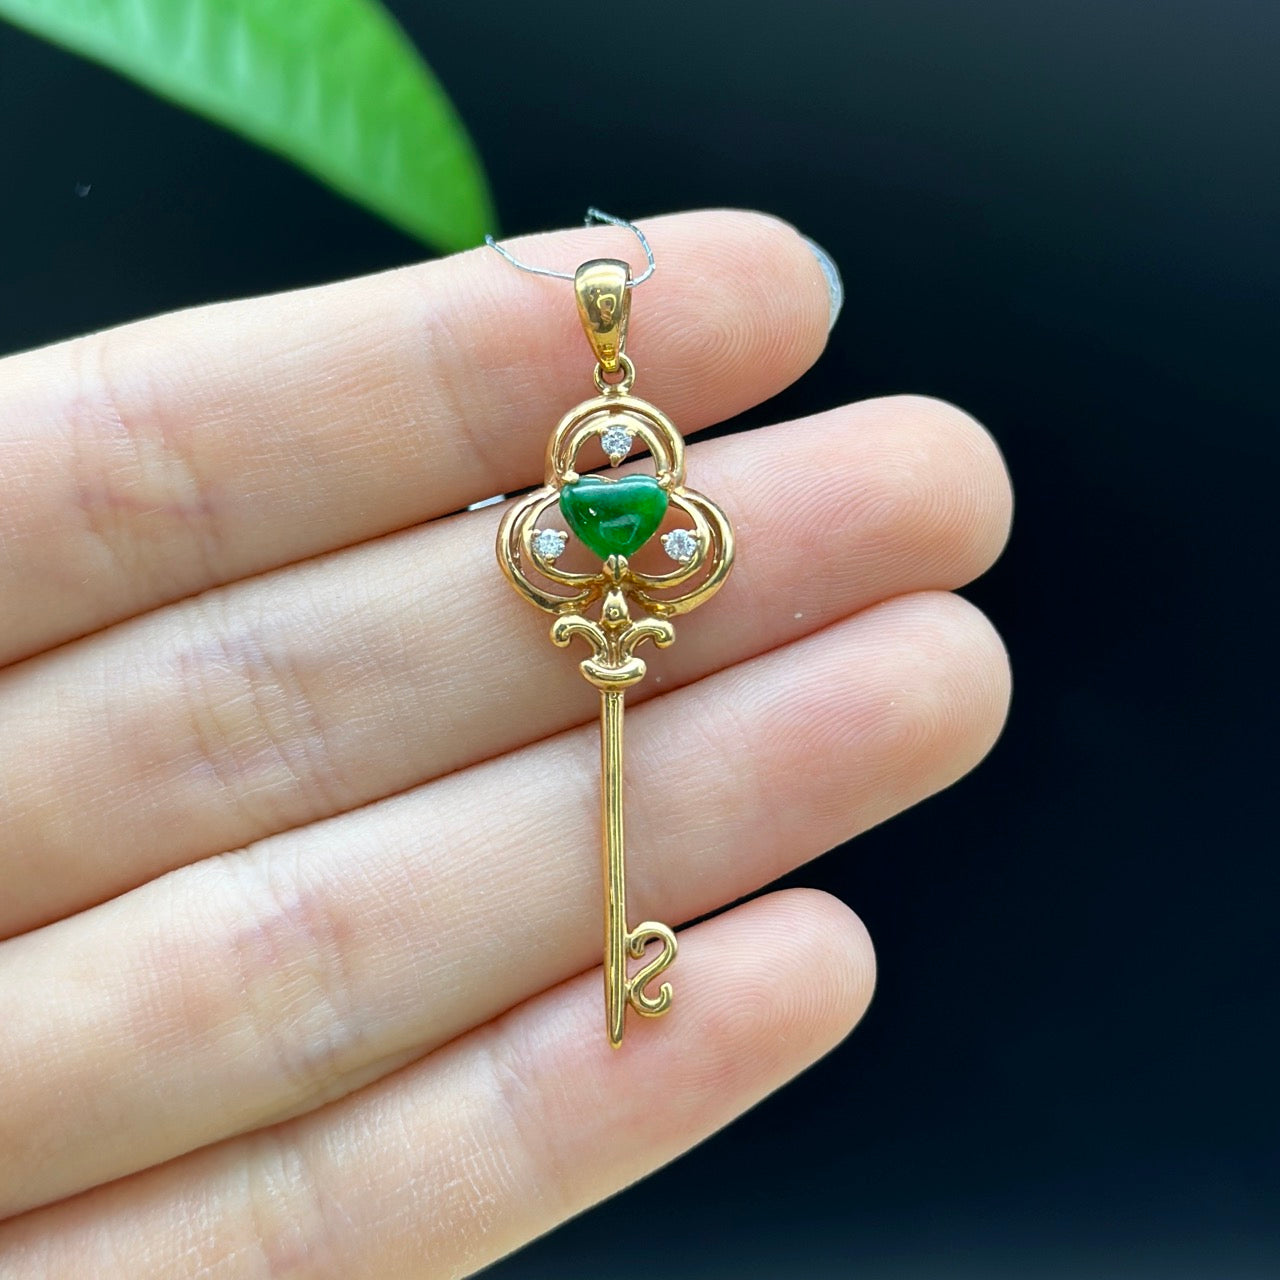 RealJade "Heart Key" 18k Yellow Gold Genuine Burmese Jadeite Key Pendant Necklace